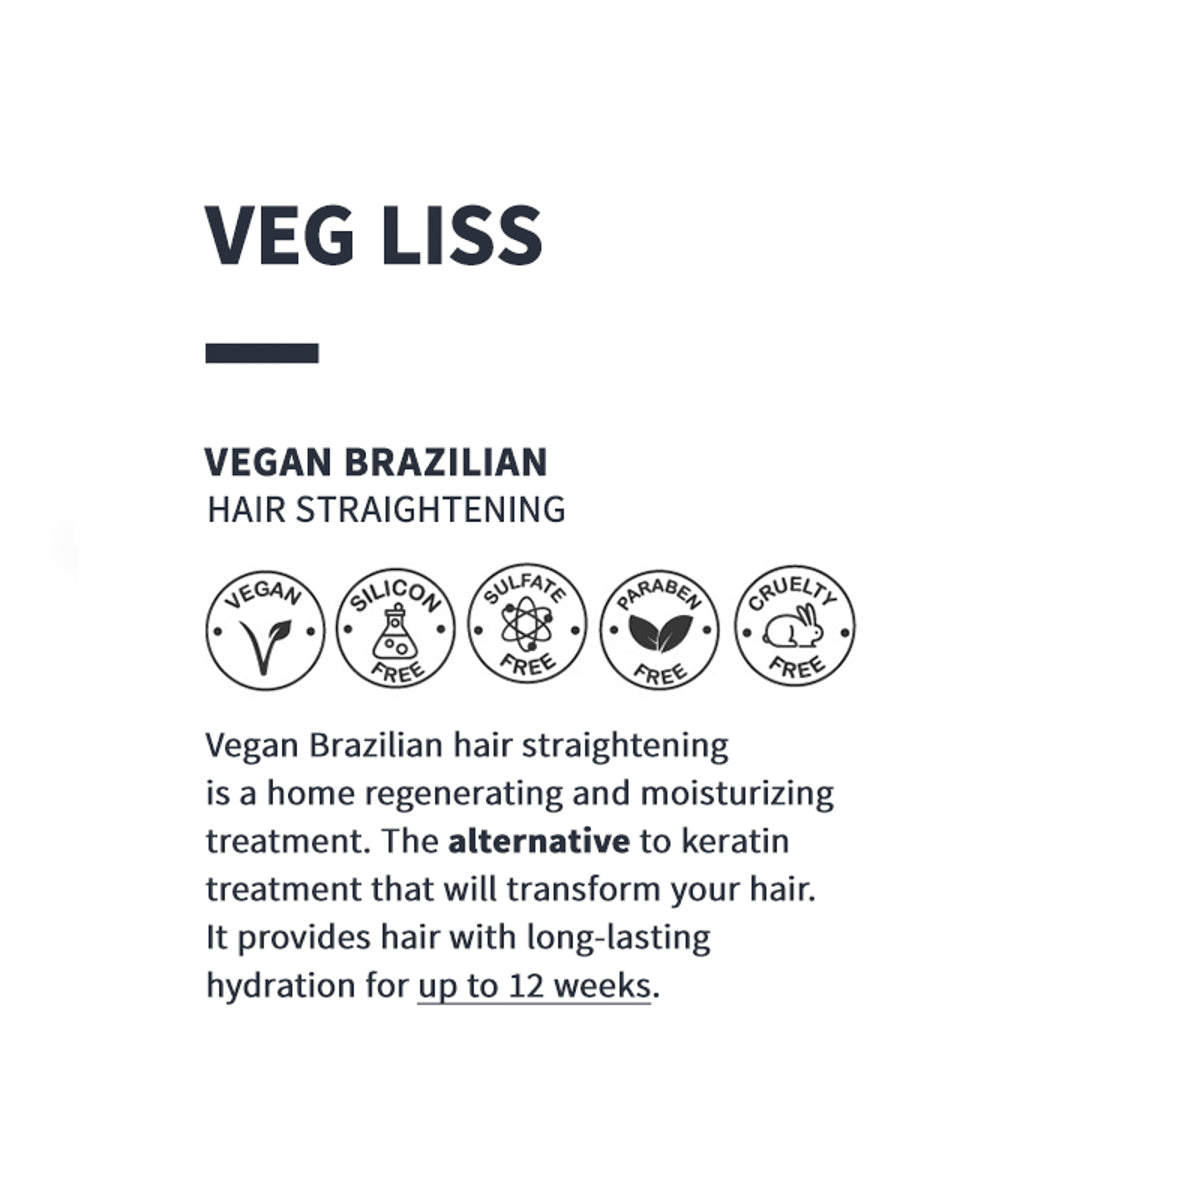 ALTERLOOK VEG LISS lissage brésilien vegan professionnel 120 ml + 30 ml